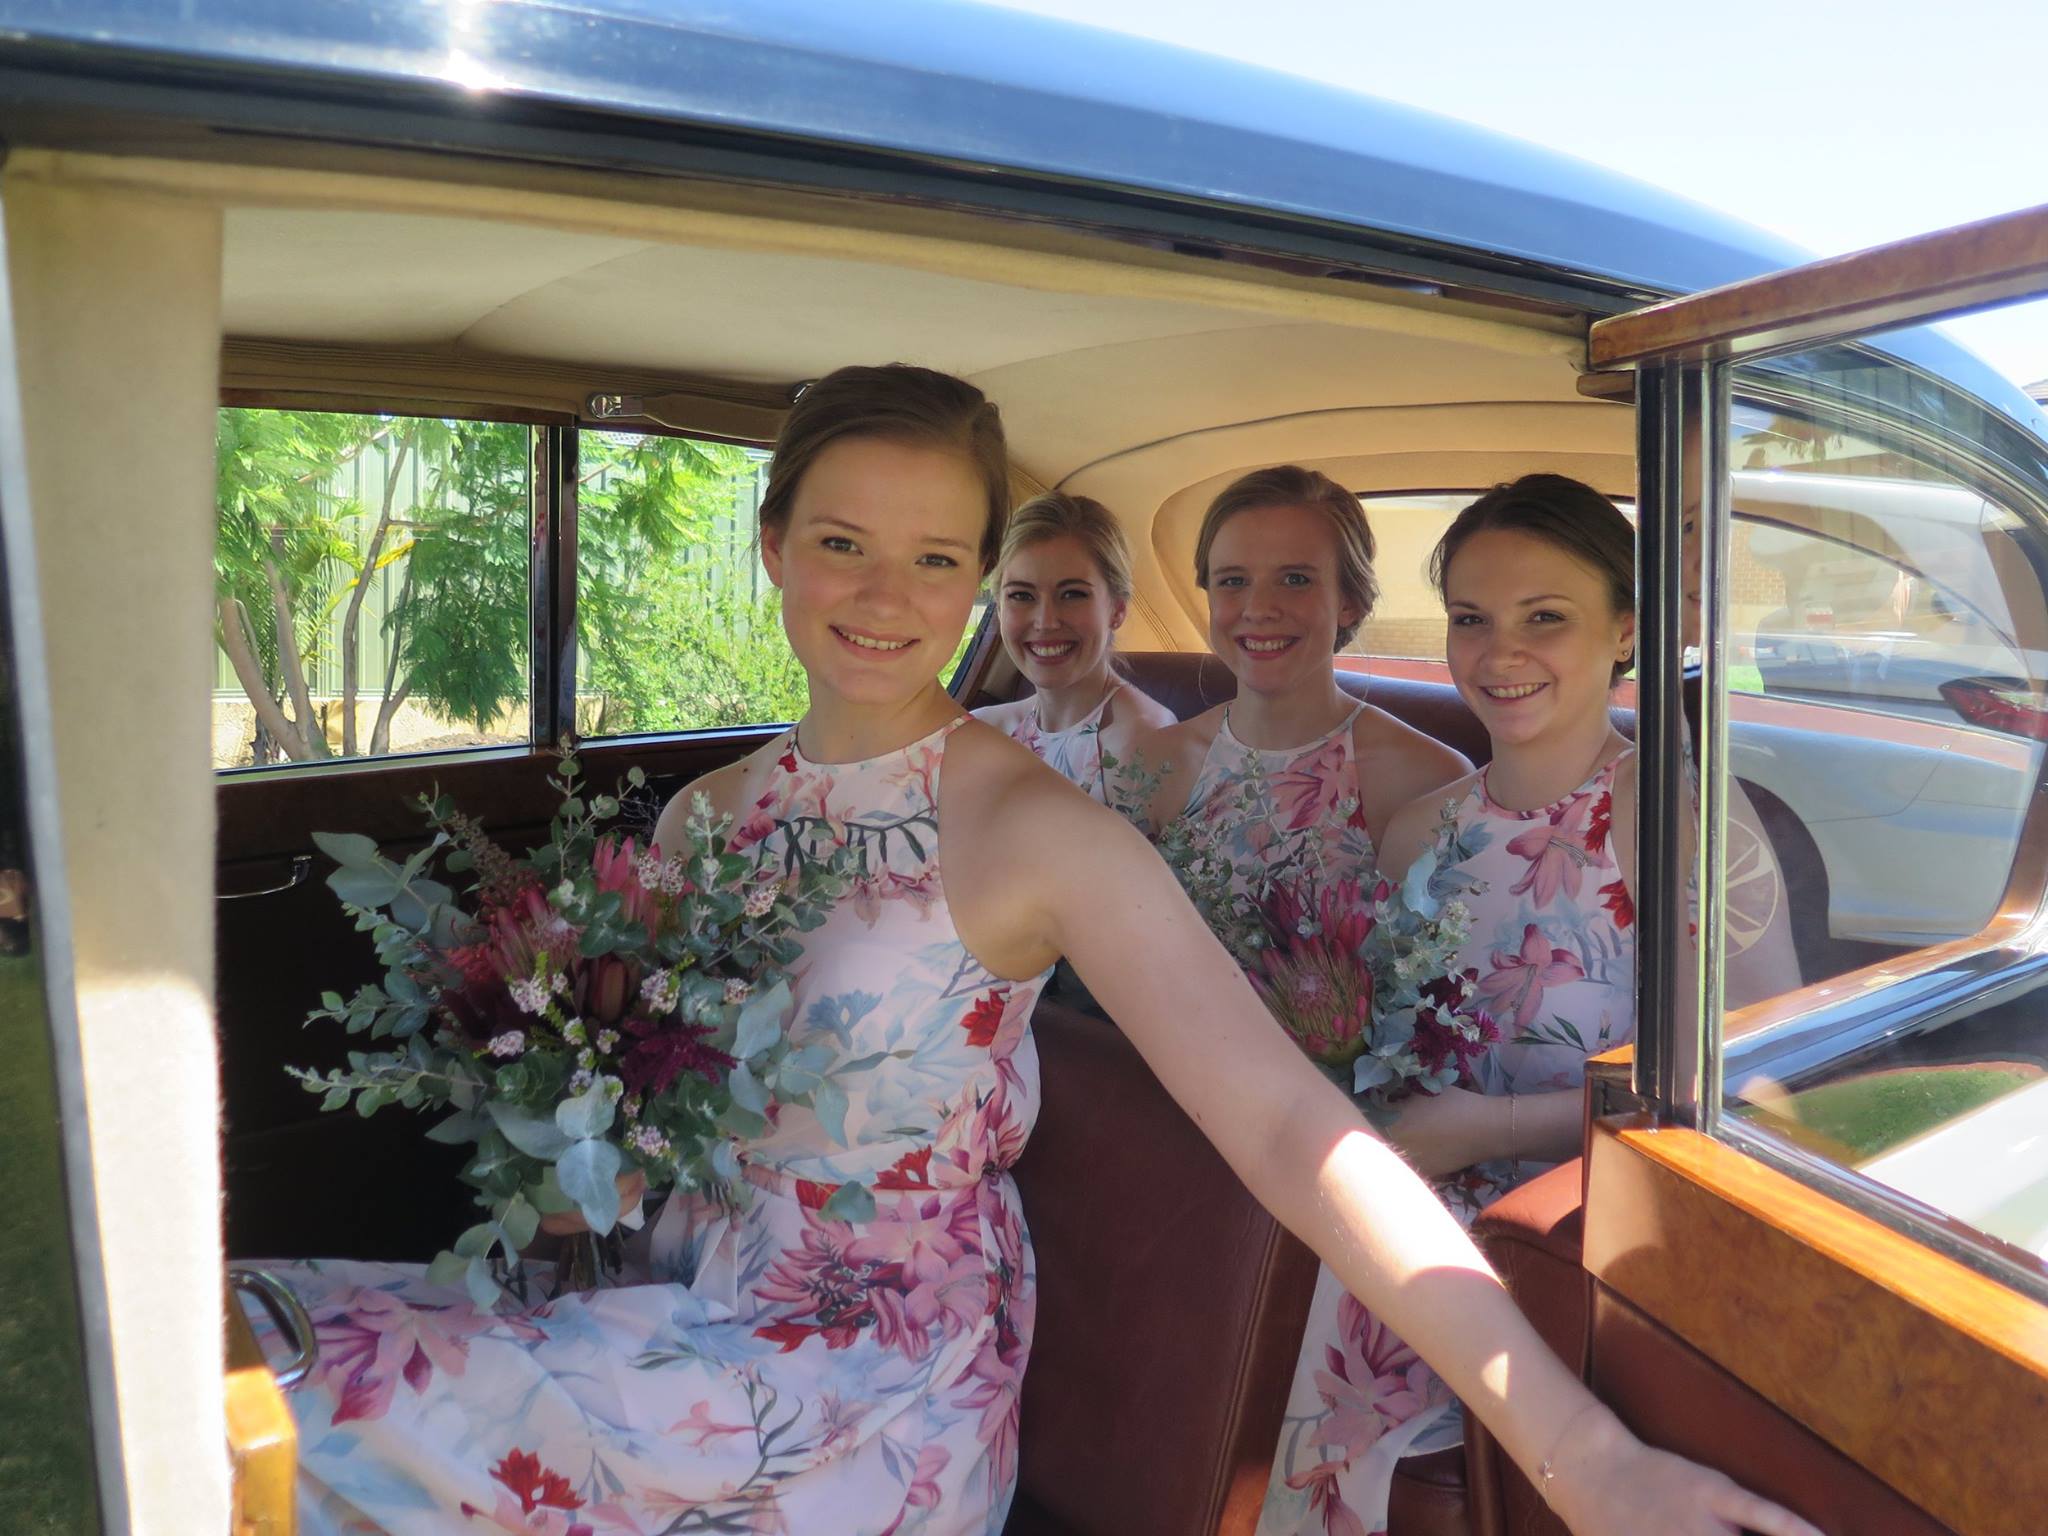 16a-Kaitlins_girls_in_Very_Nice_Classics_wedding_car_Perth_February_2017.jpg